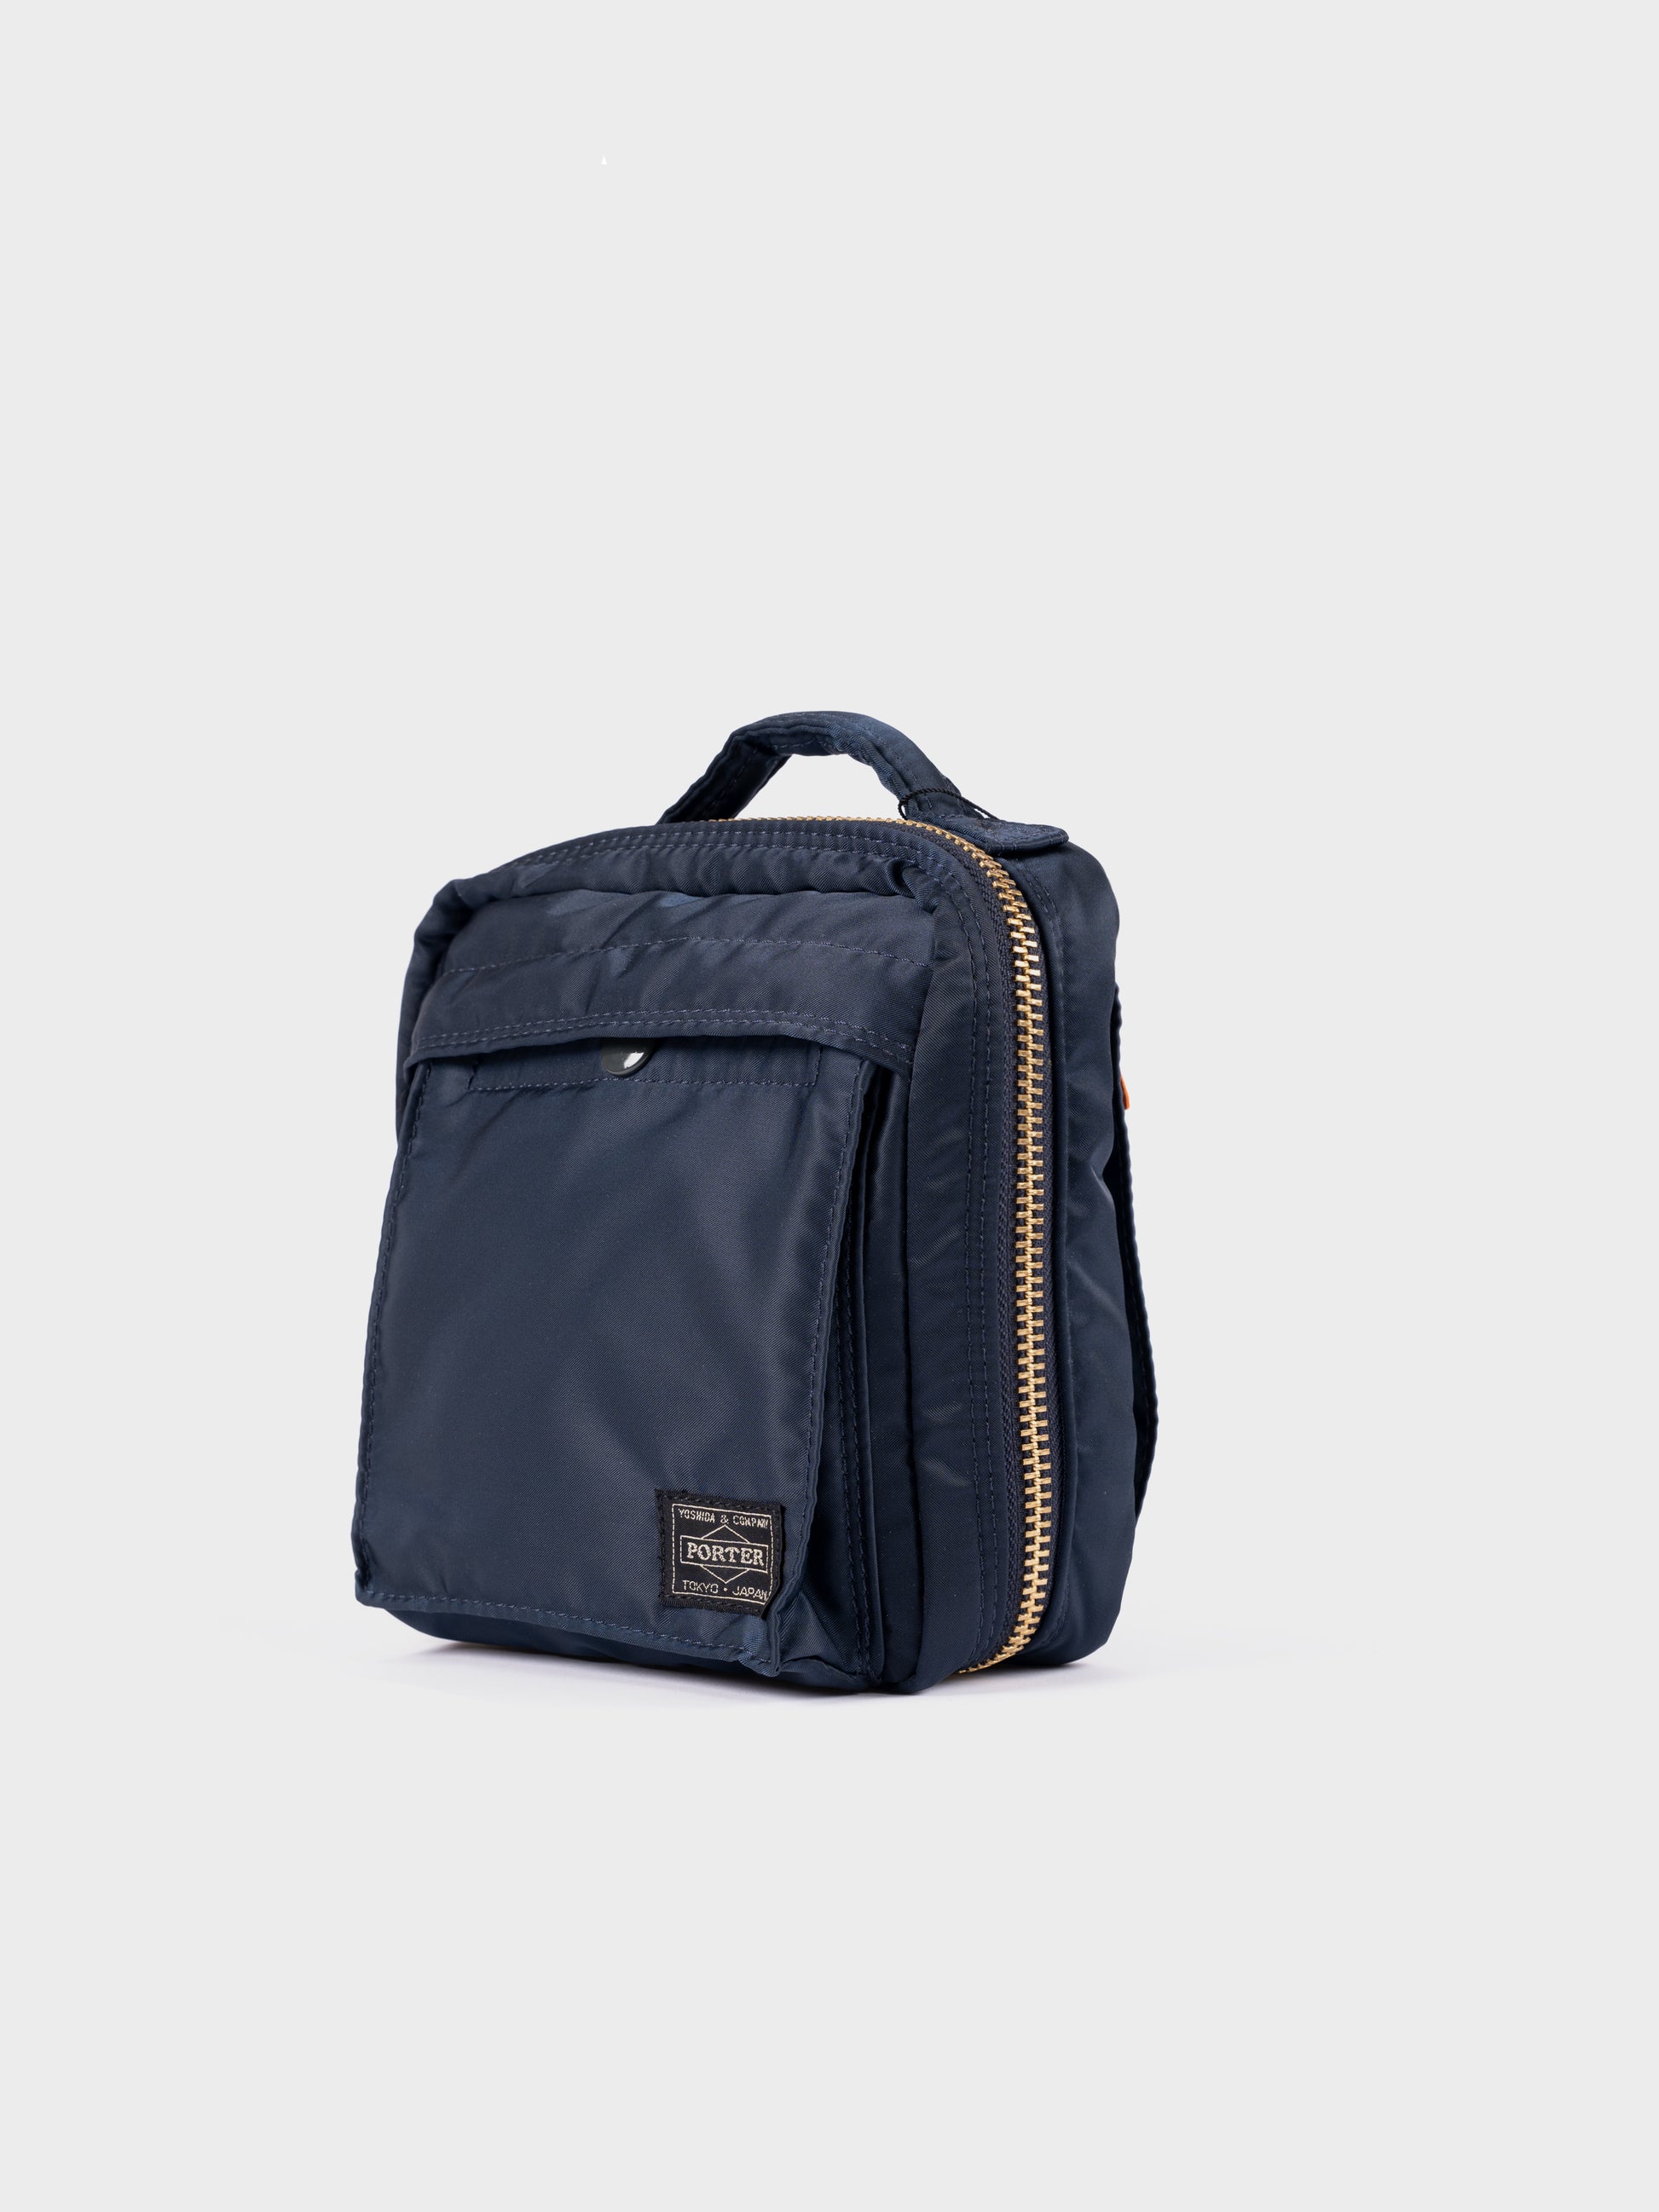 Porter-Yoshida & Co Tanker Square Shoulder Bag - Iron Blue